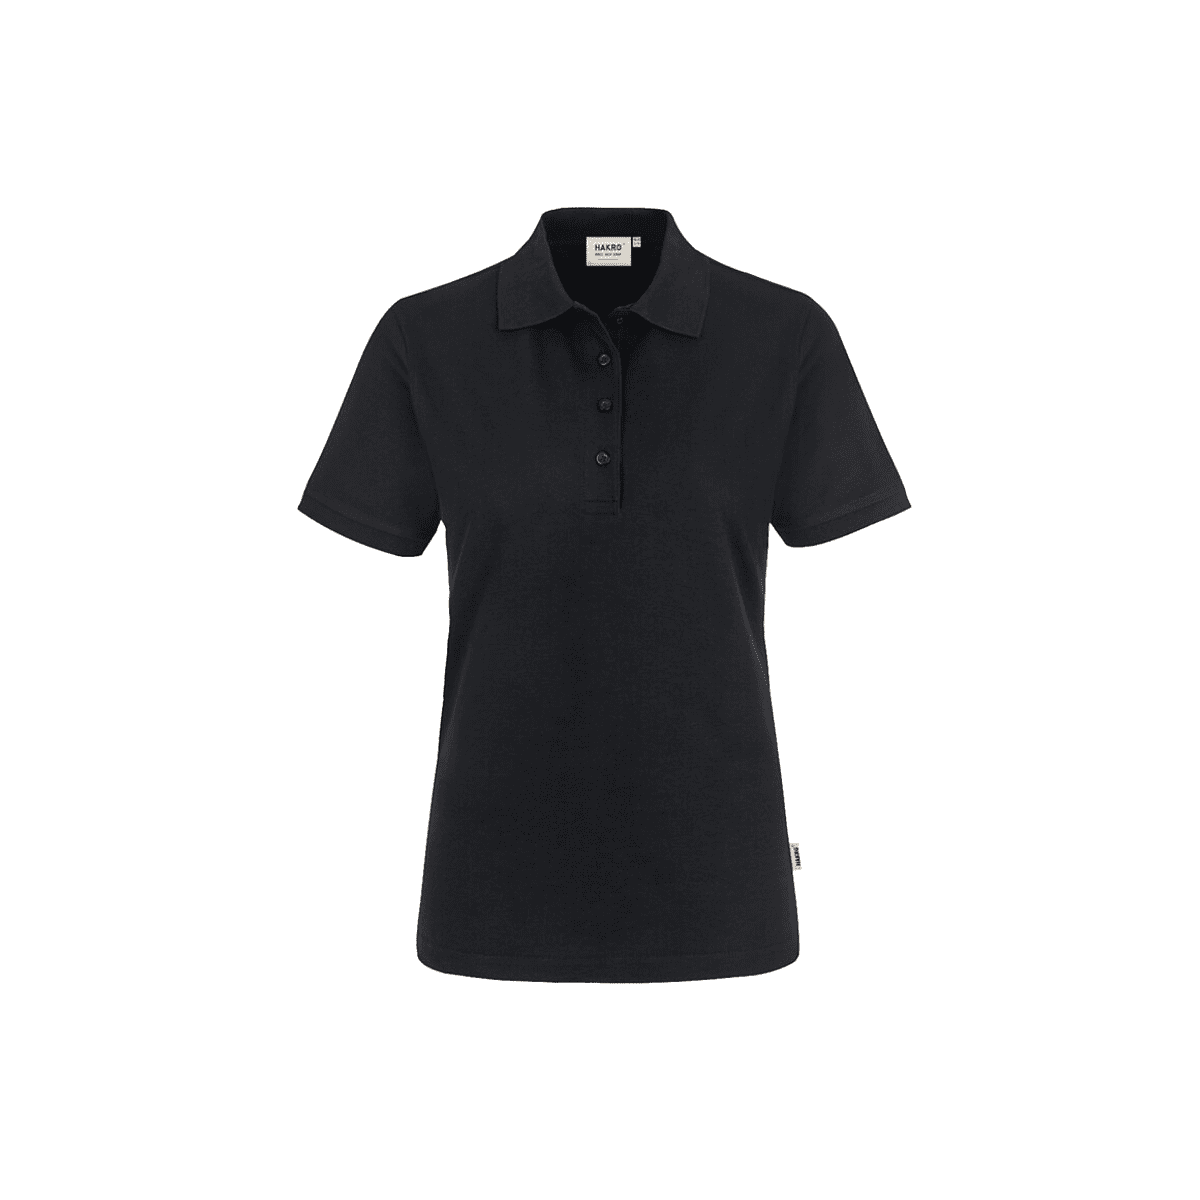 Damen Polo-Shirt Funktion schwarz